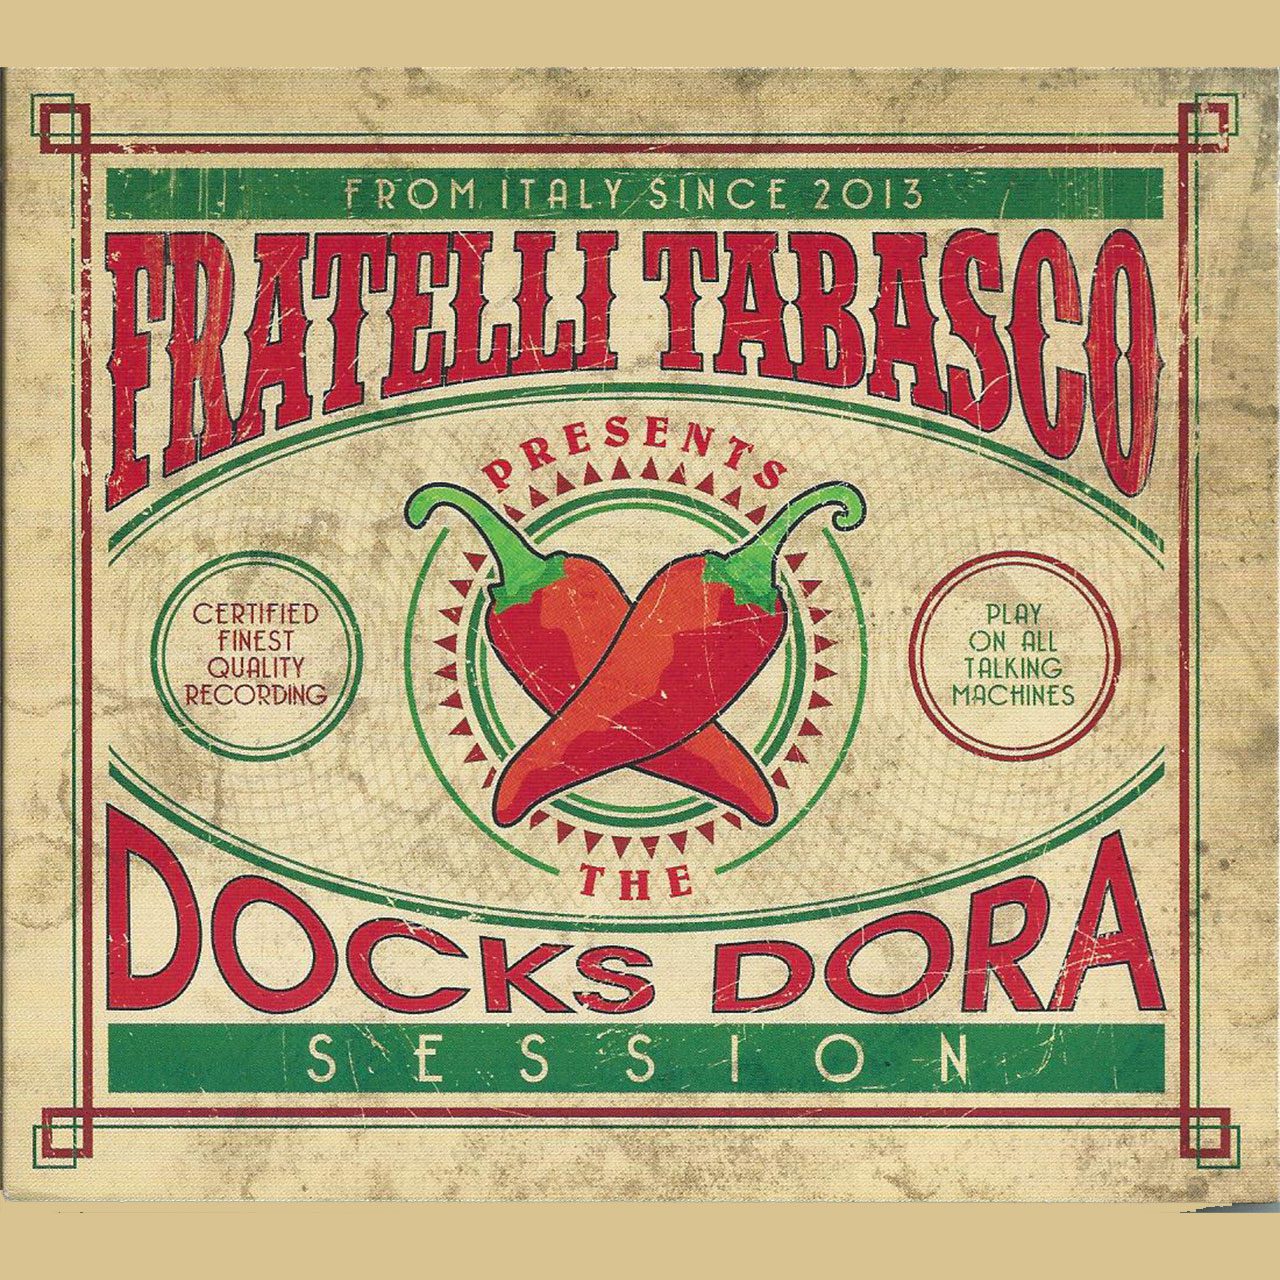 Fratelli-Tabasco---“Docks-Dora-Session” cover album